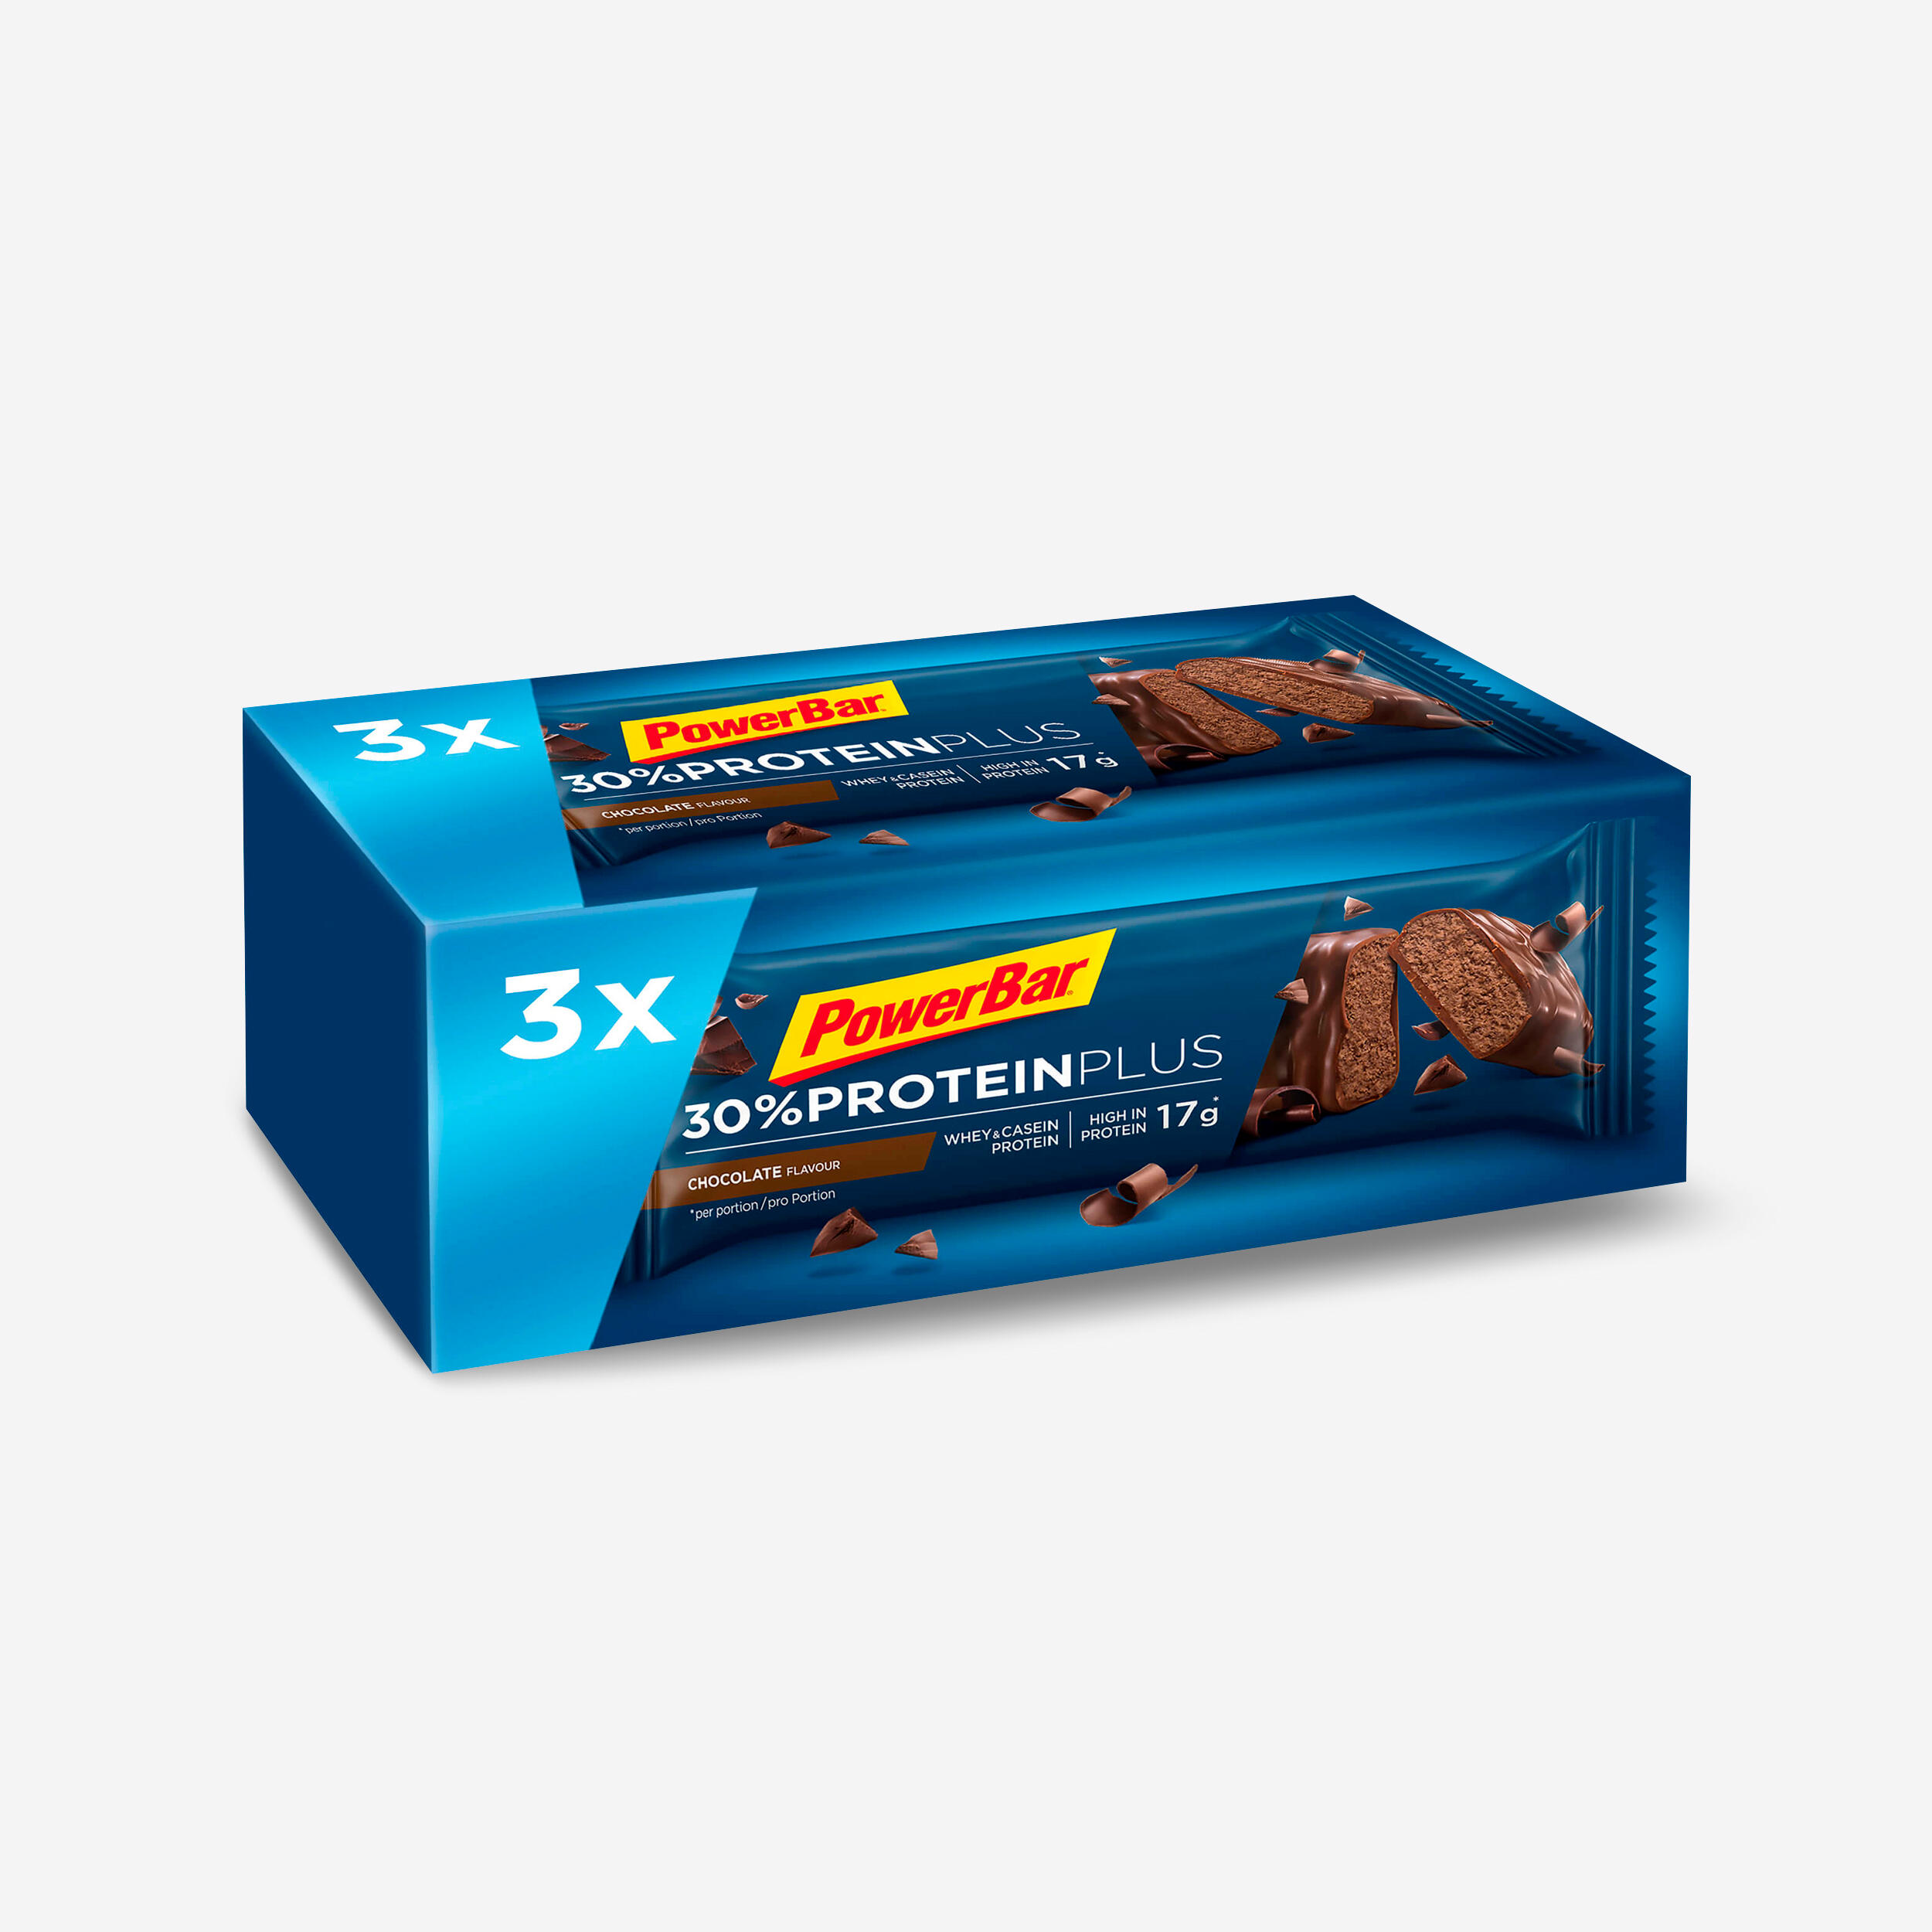 Protein Plus Protein Bar 3x55g - chocolate 1/5